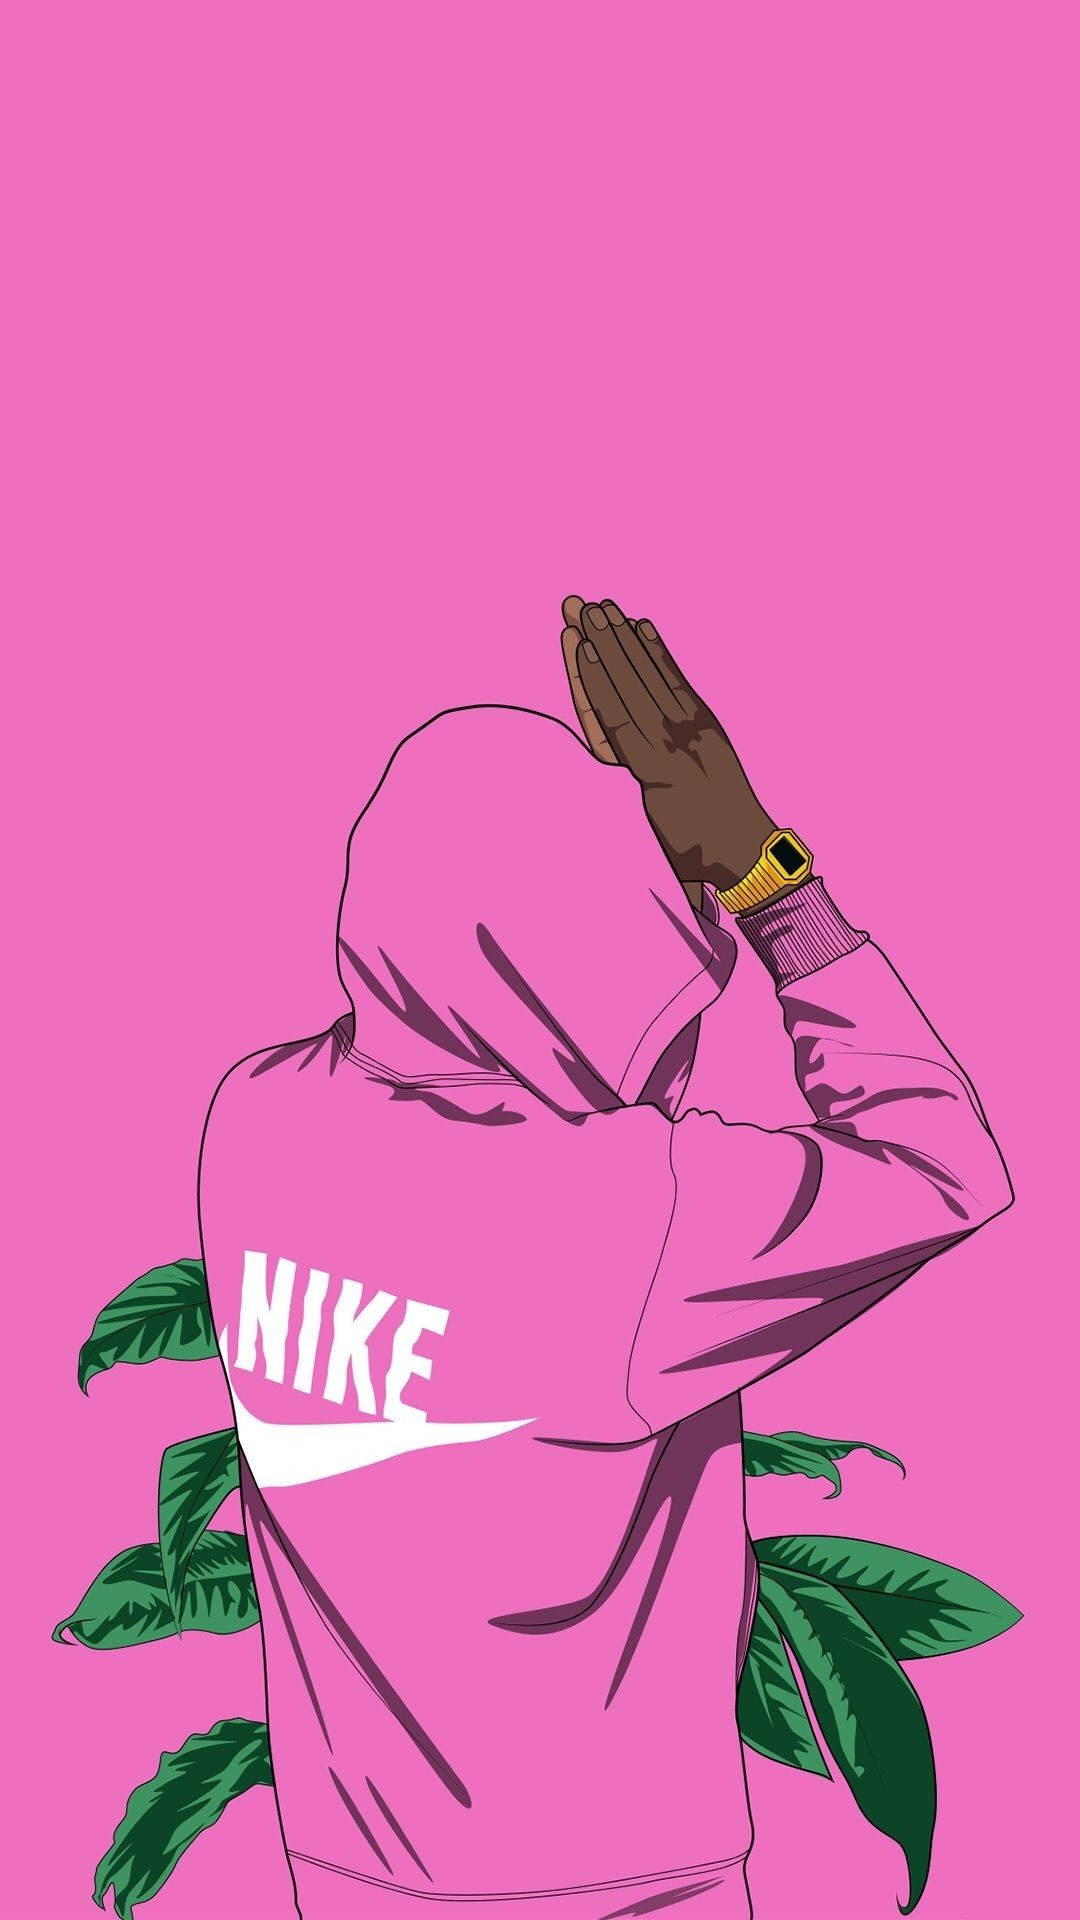 Man In Pink Nike Cartoon Art